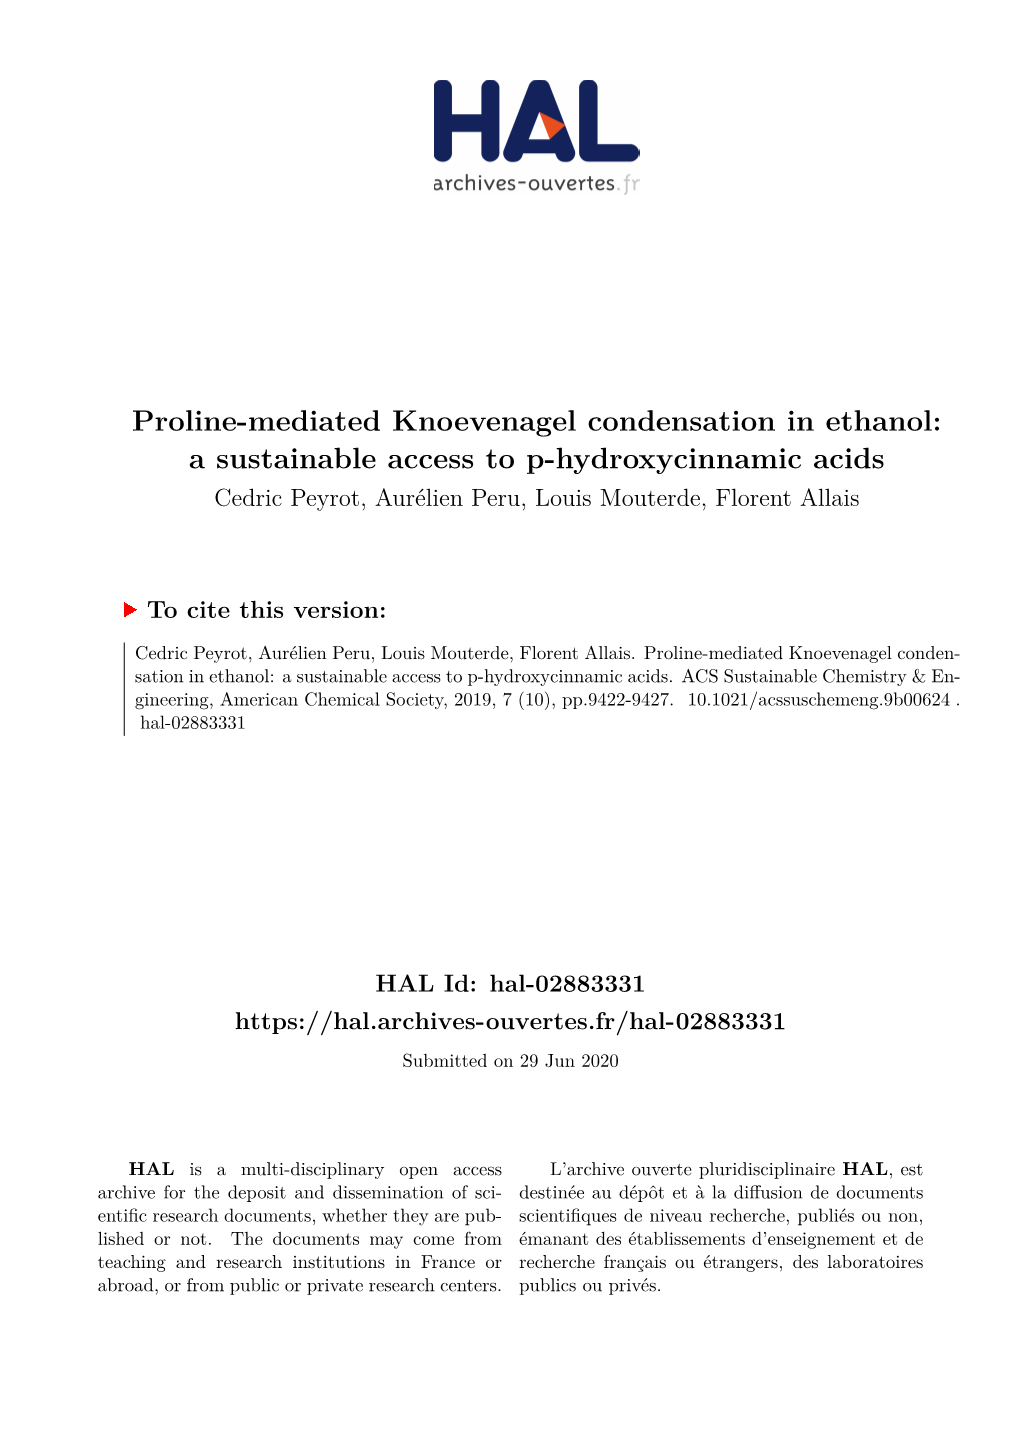 Proline-Mediated Knoevenagel Condensation in Ethanol: a Sustainable Access to P-Hydroxycinnamic Acids Cedric Peyrot, Aurélien Peru, Louis Mouterde, Florent Allais